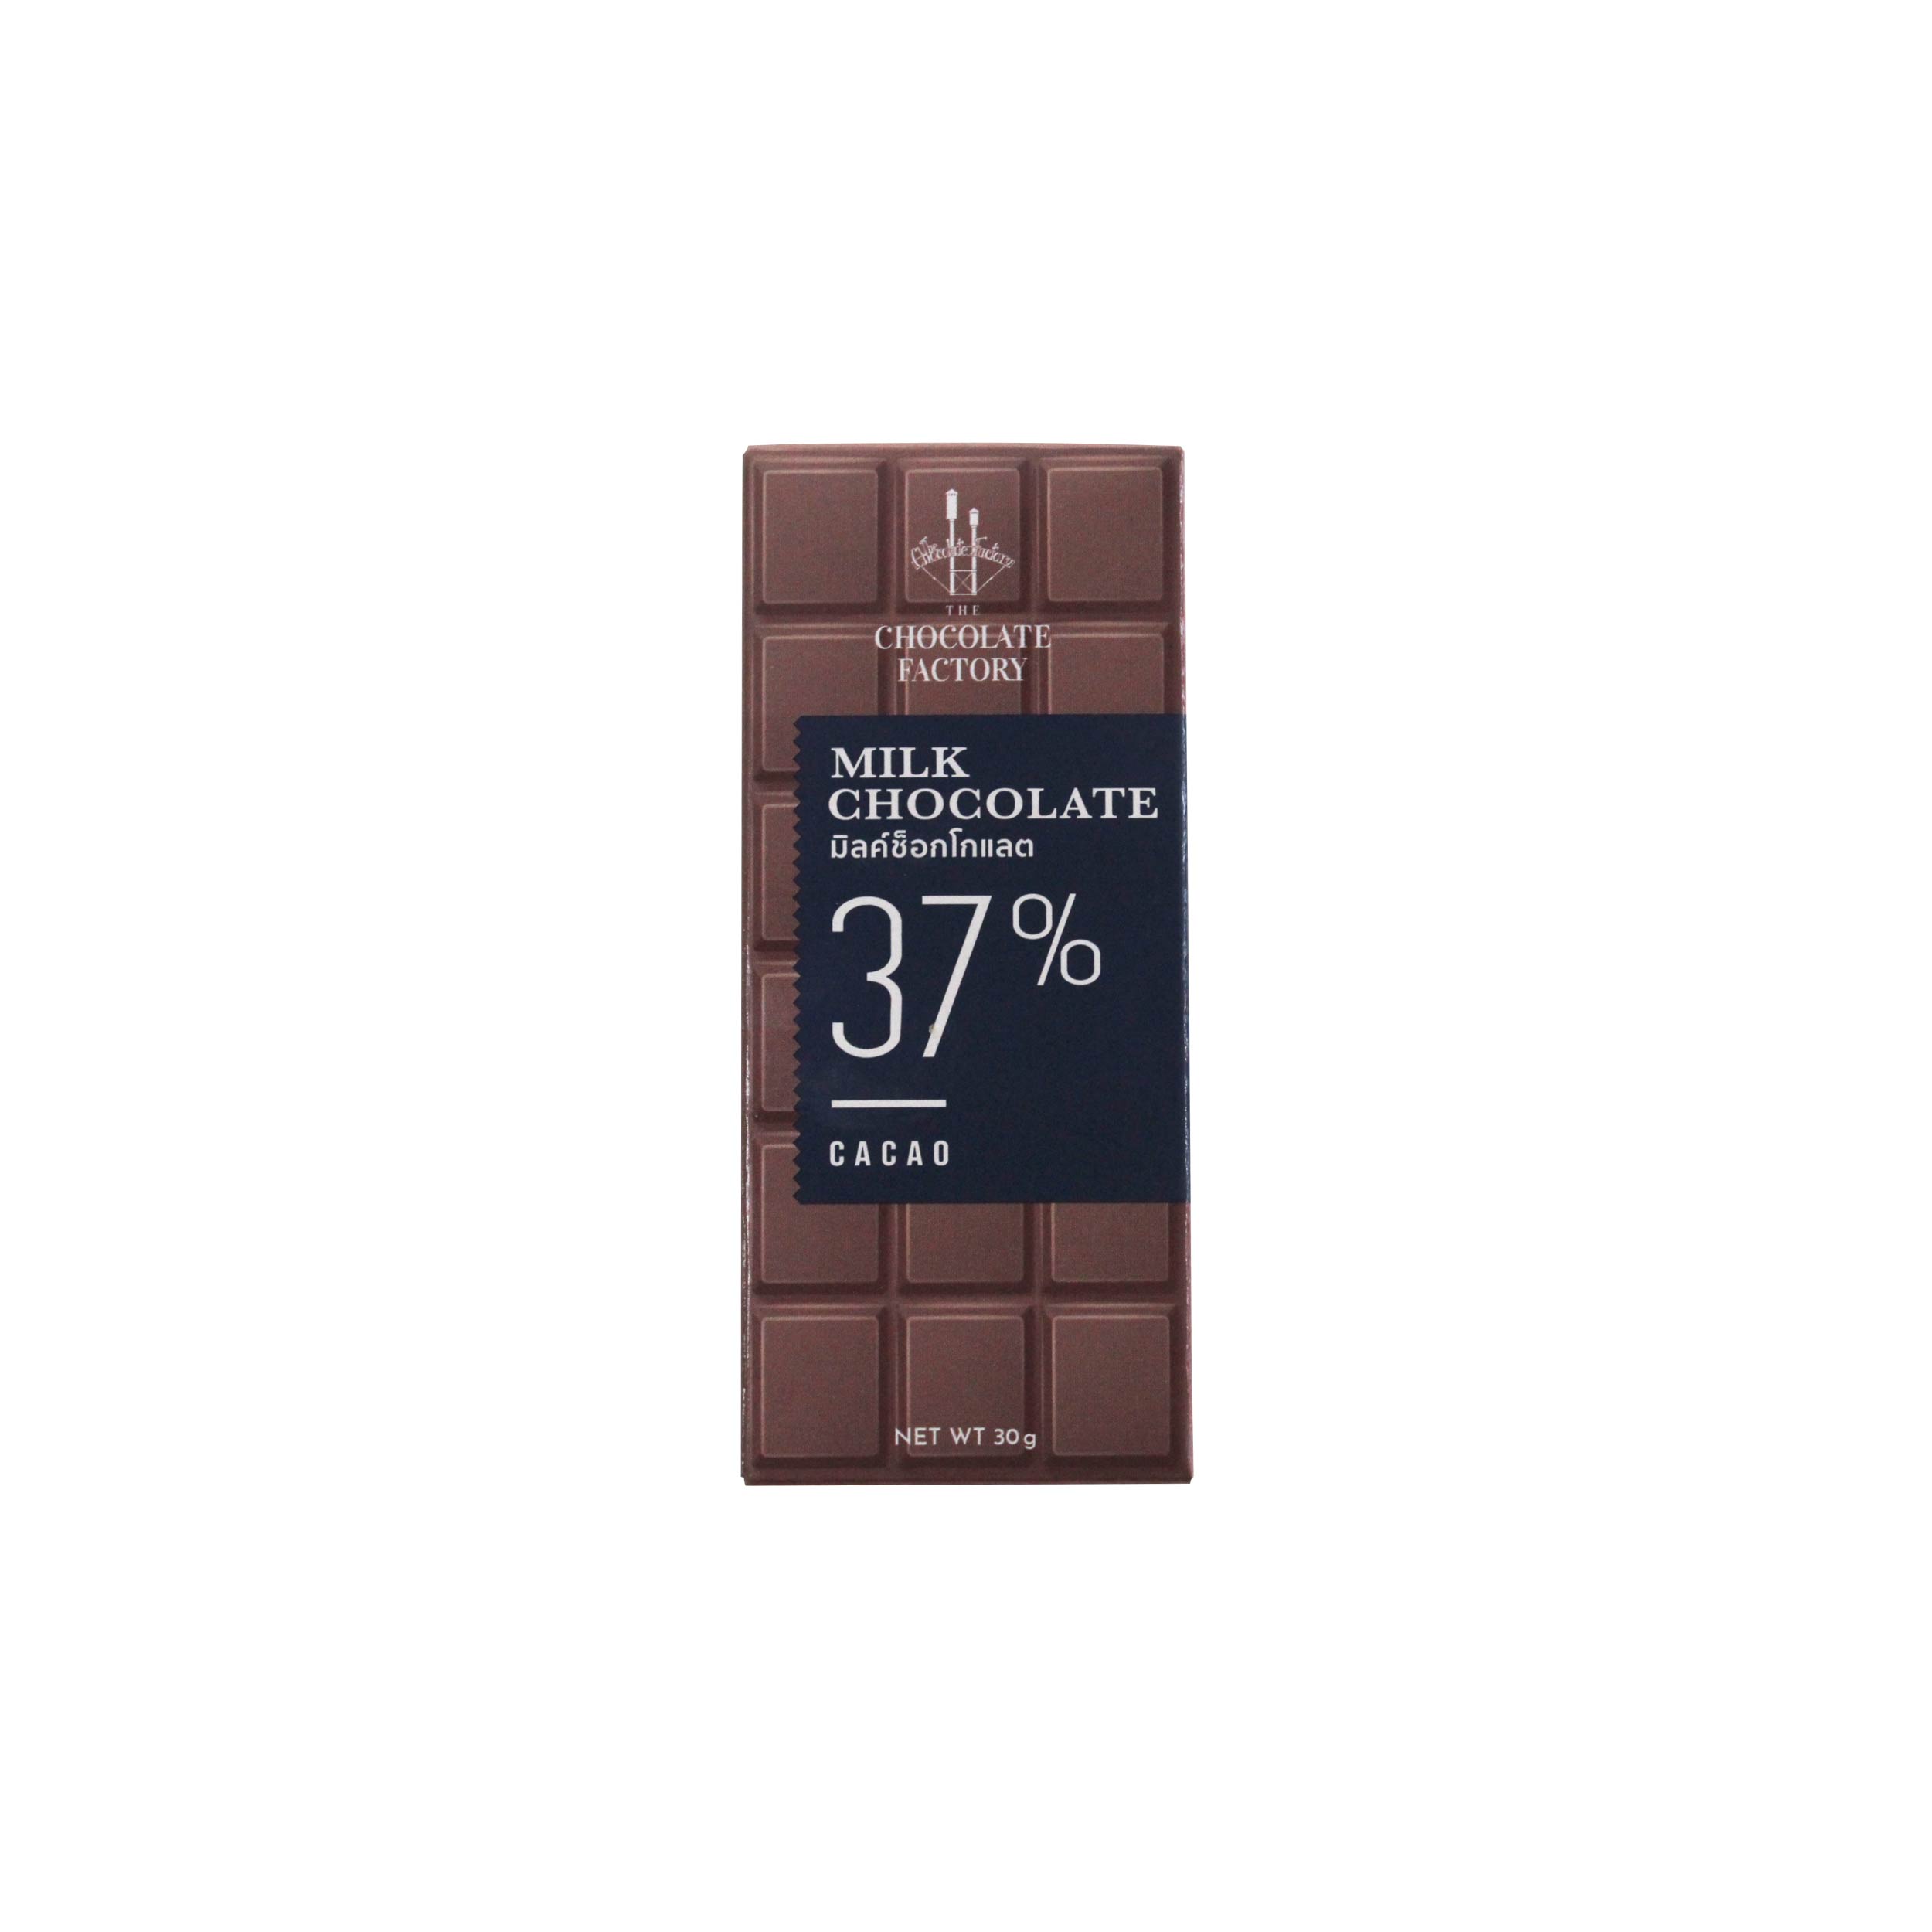 The Chocolate Factory-Chocolate bar 37%